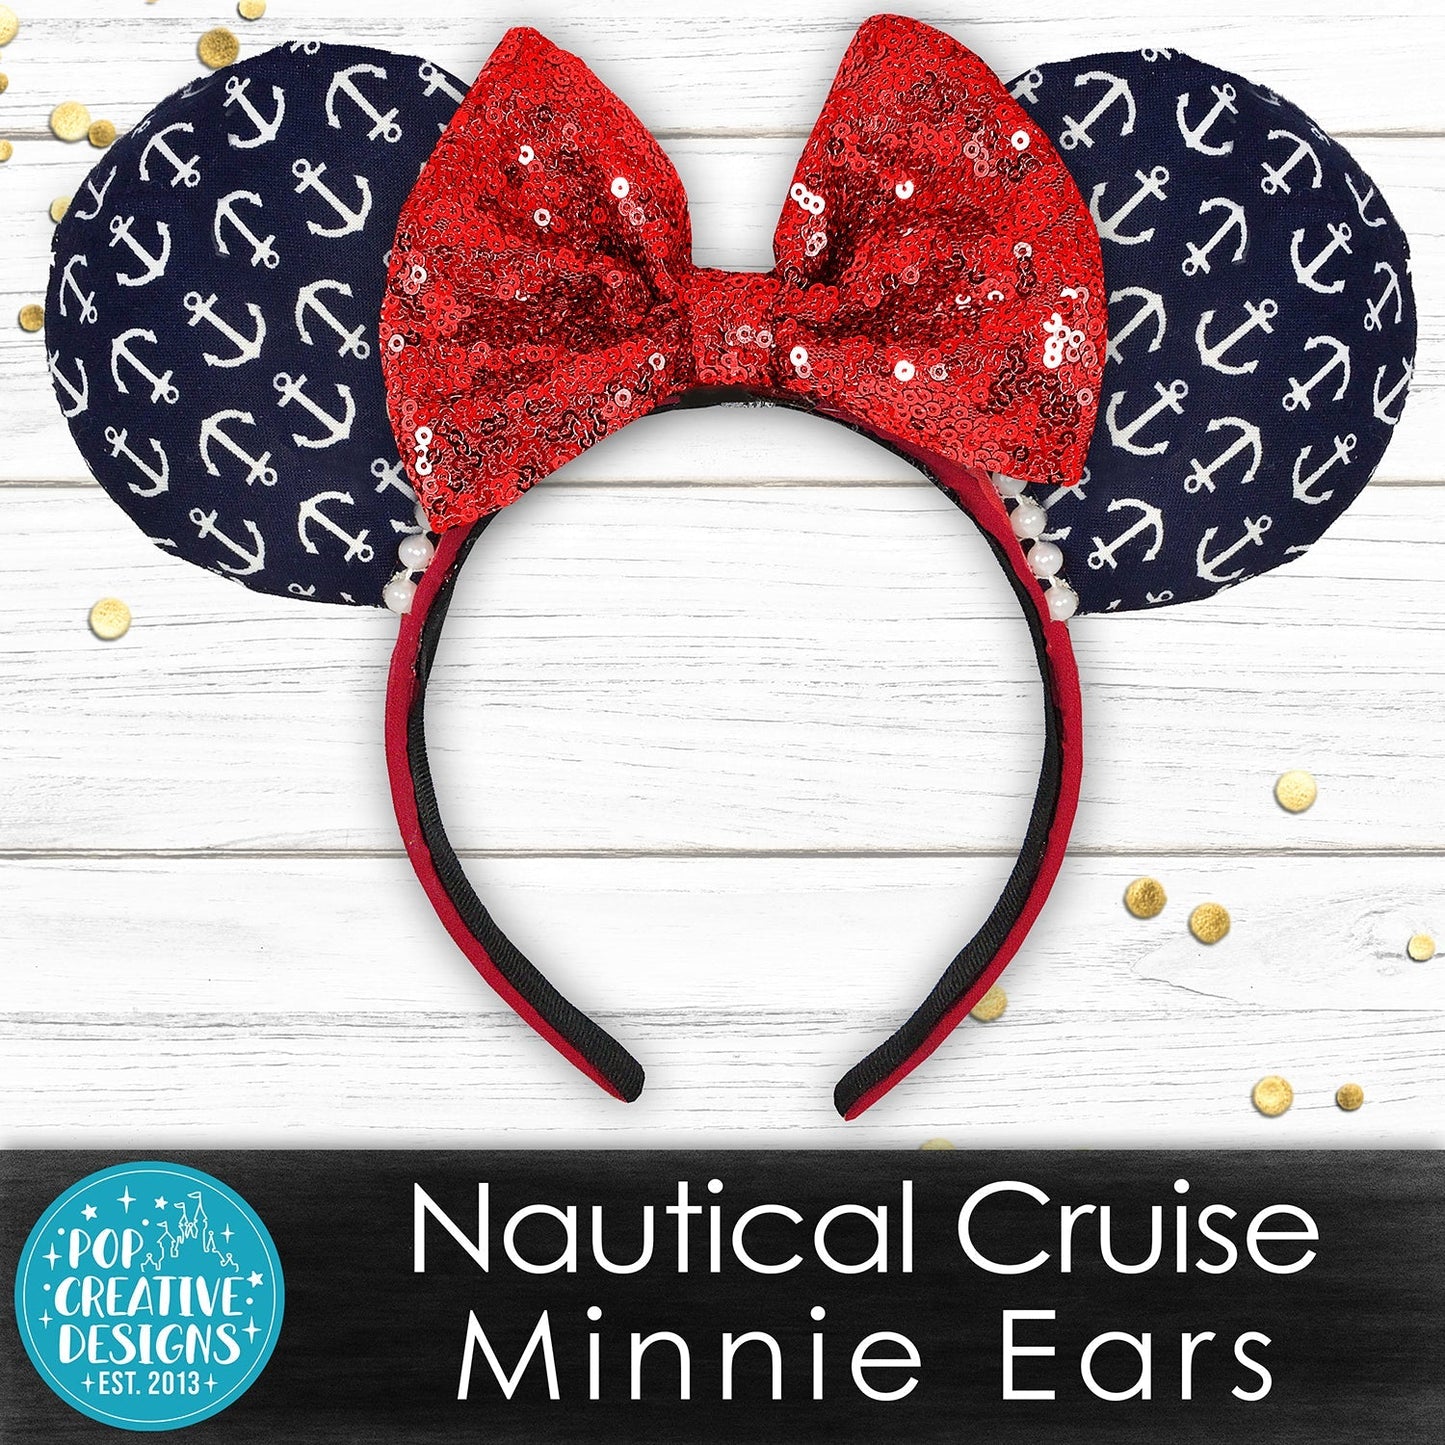 Nautical Cruise Minnie Ears